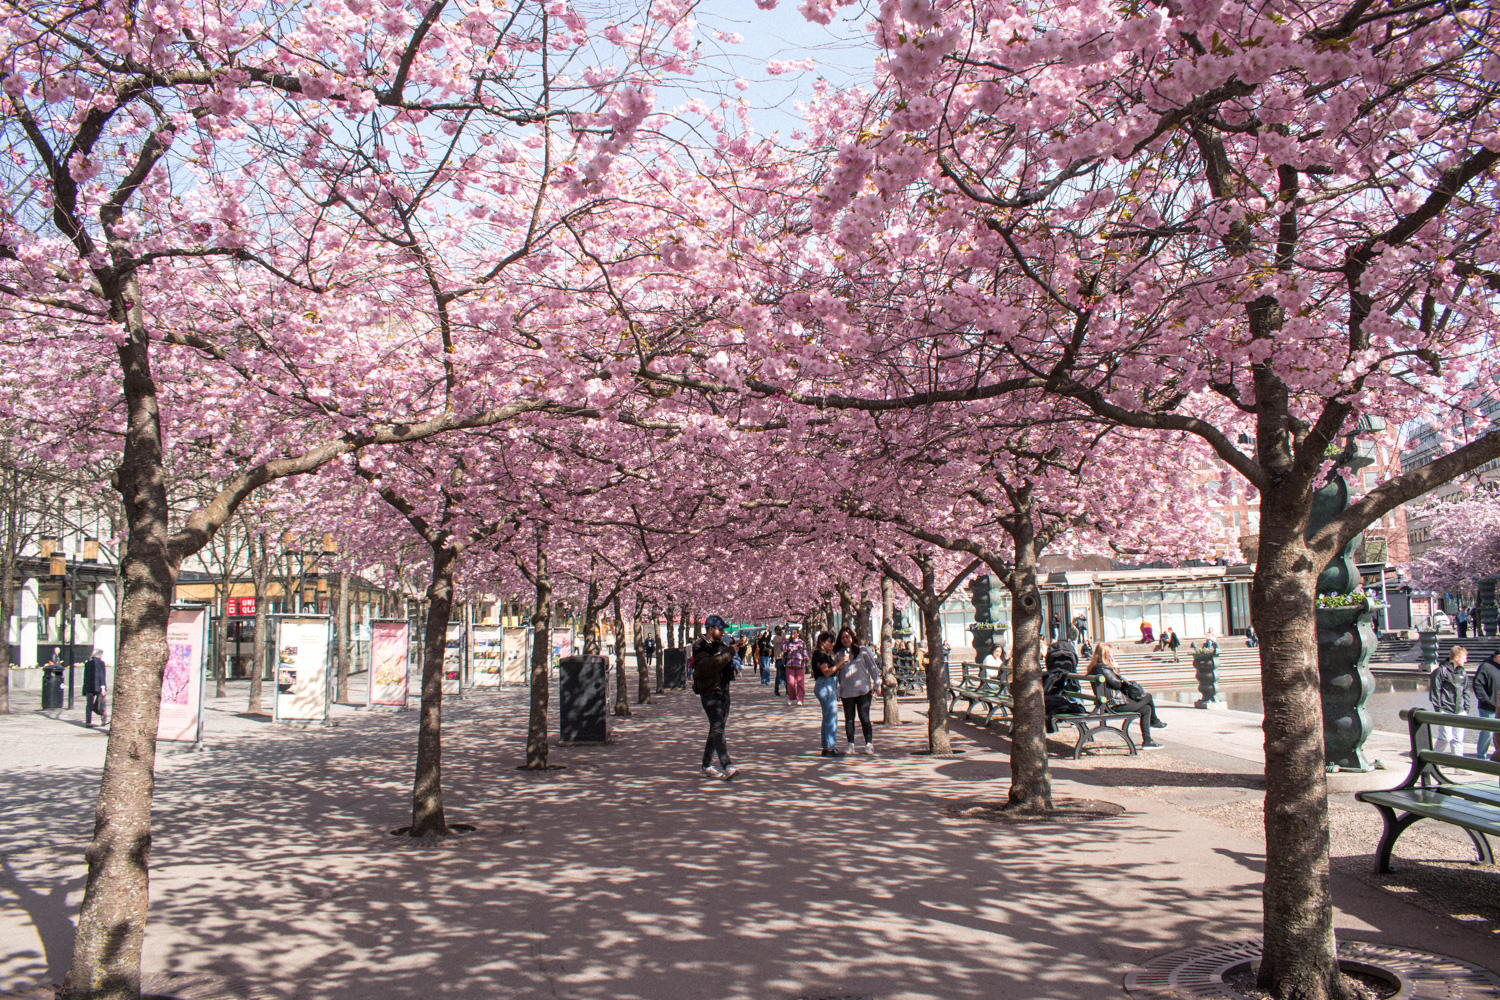 Cherry blossom in Stockholm